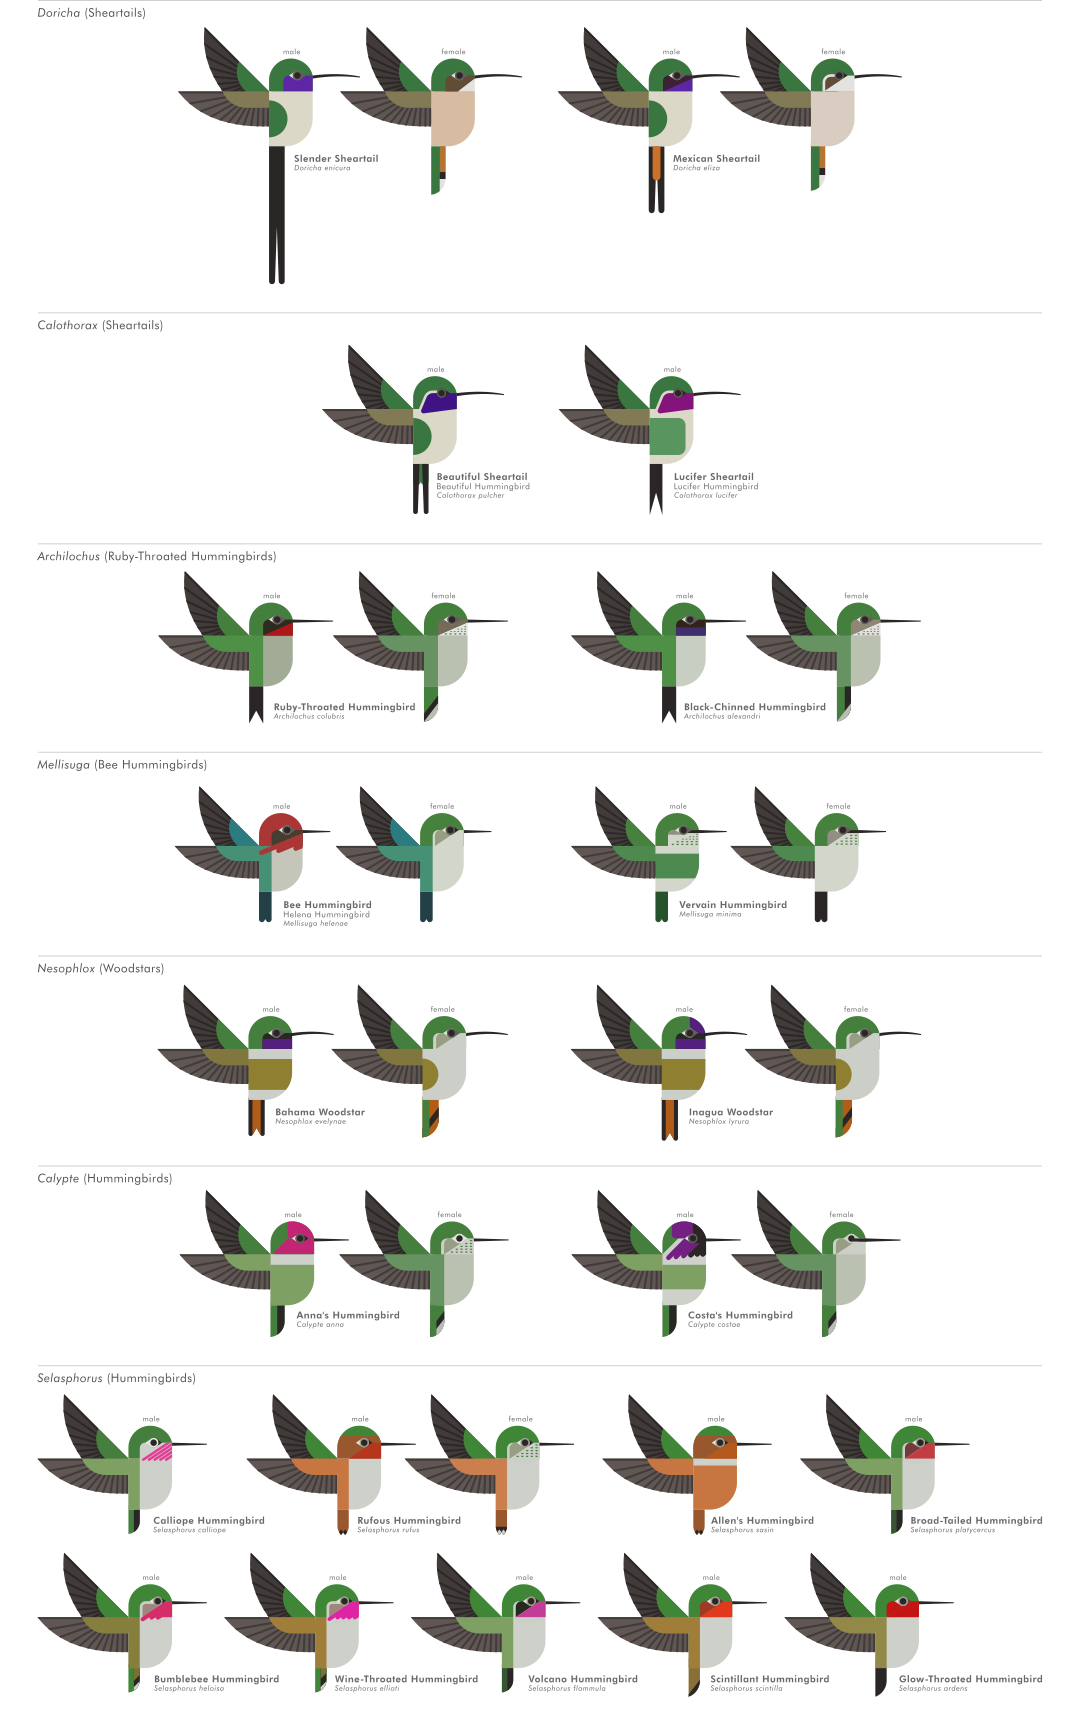 scott partridge - ave - avian vector encyclopedia - hummingbirds Trochilidae - vector bird art